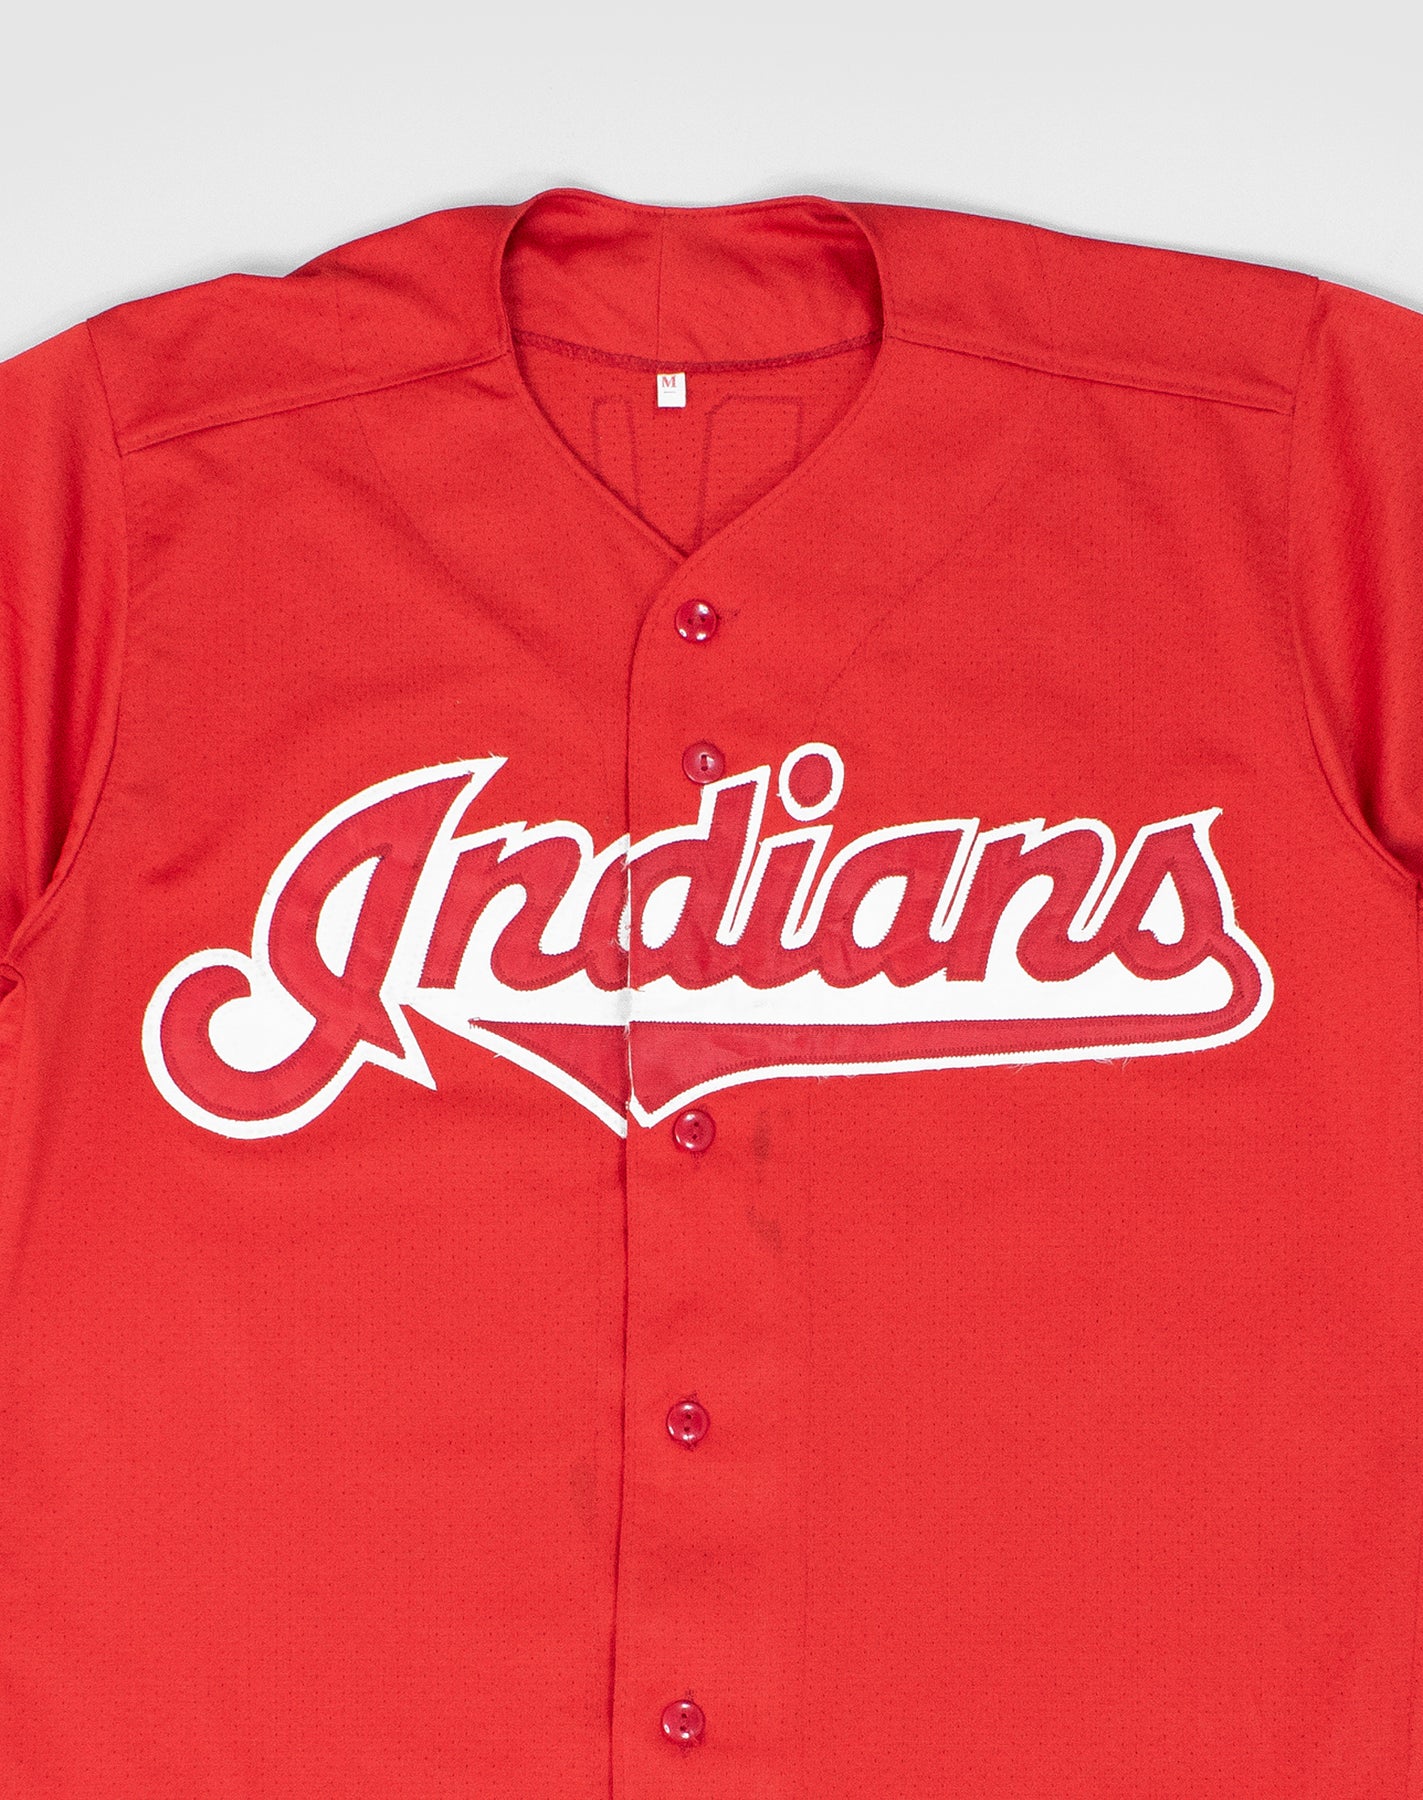 Cleveland Indians - Cheap MLB Baseball Jerseys